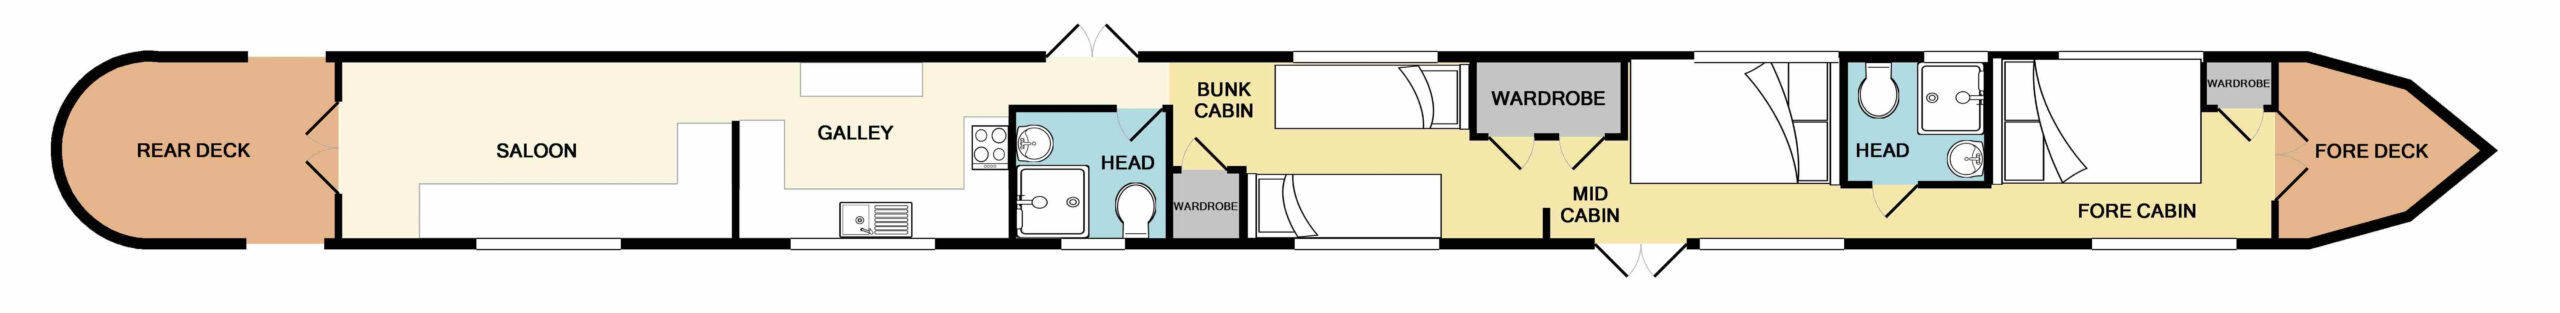 floor plan of layout of hire boat rakiraki